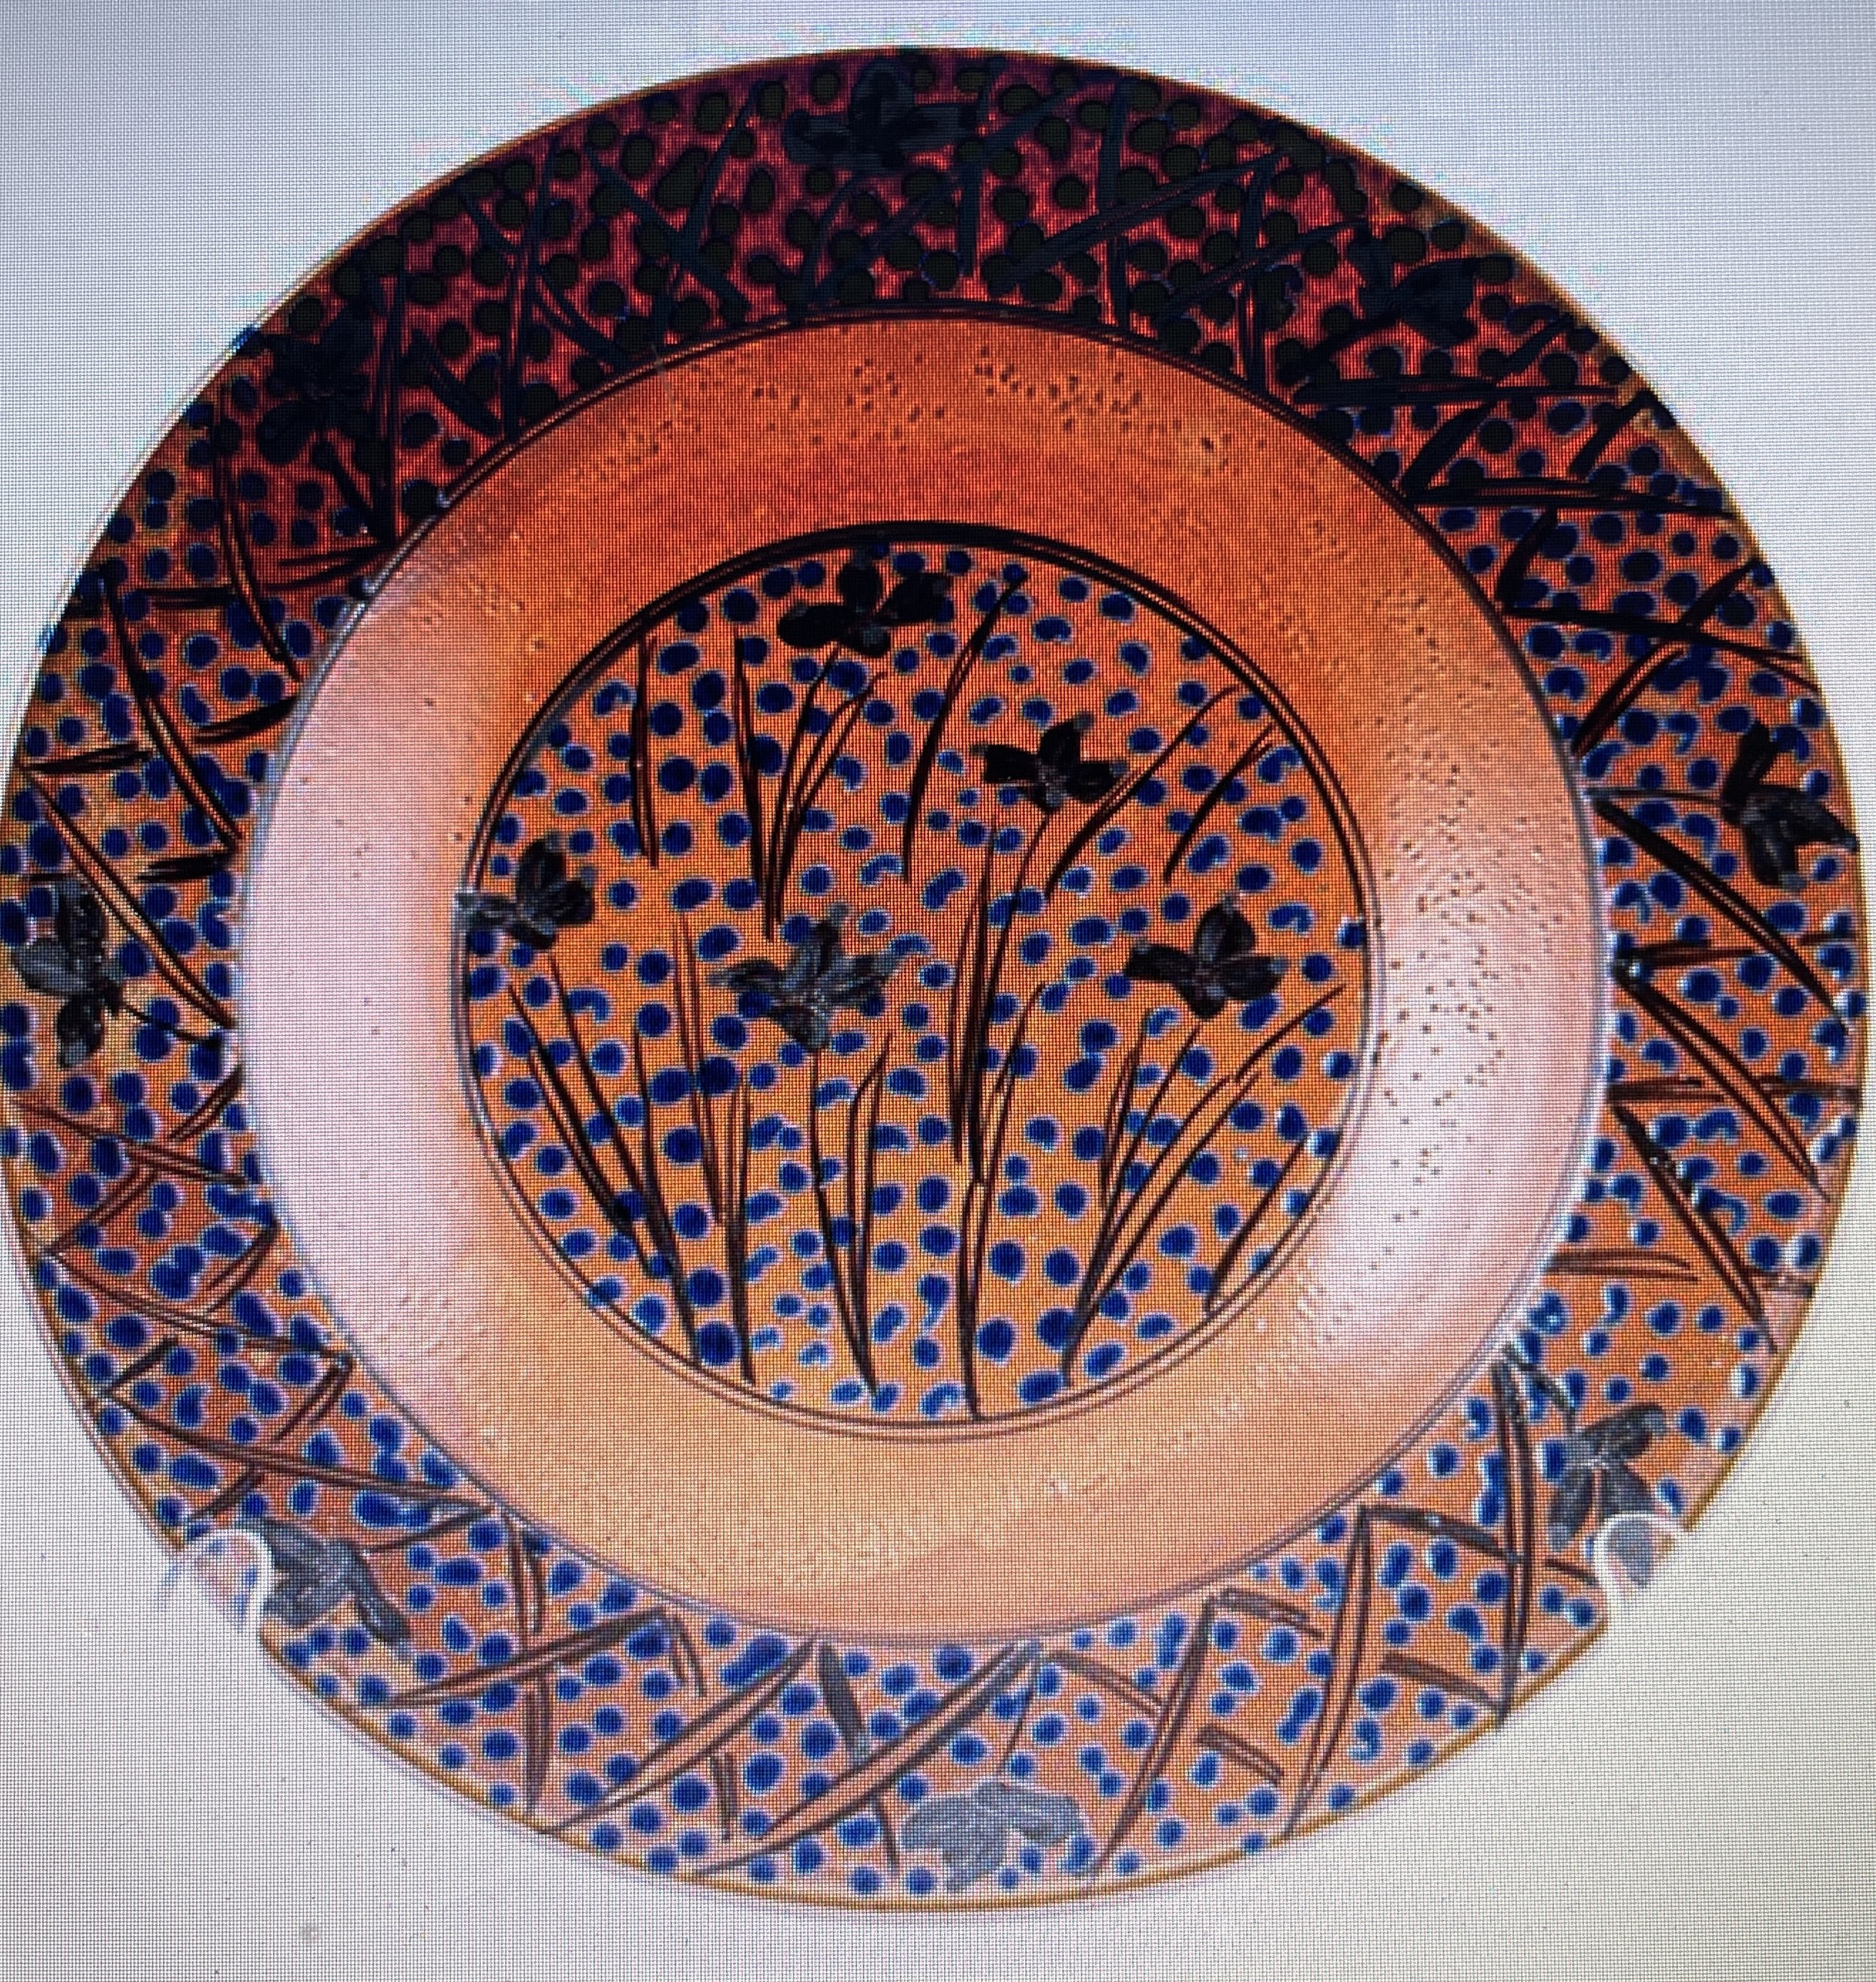 Large Plate with black iris pattern